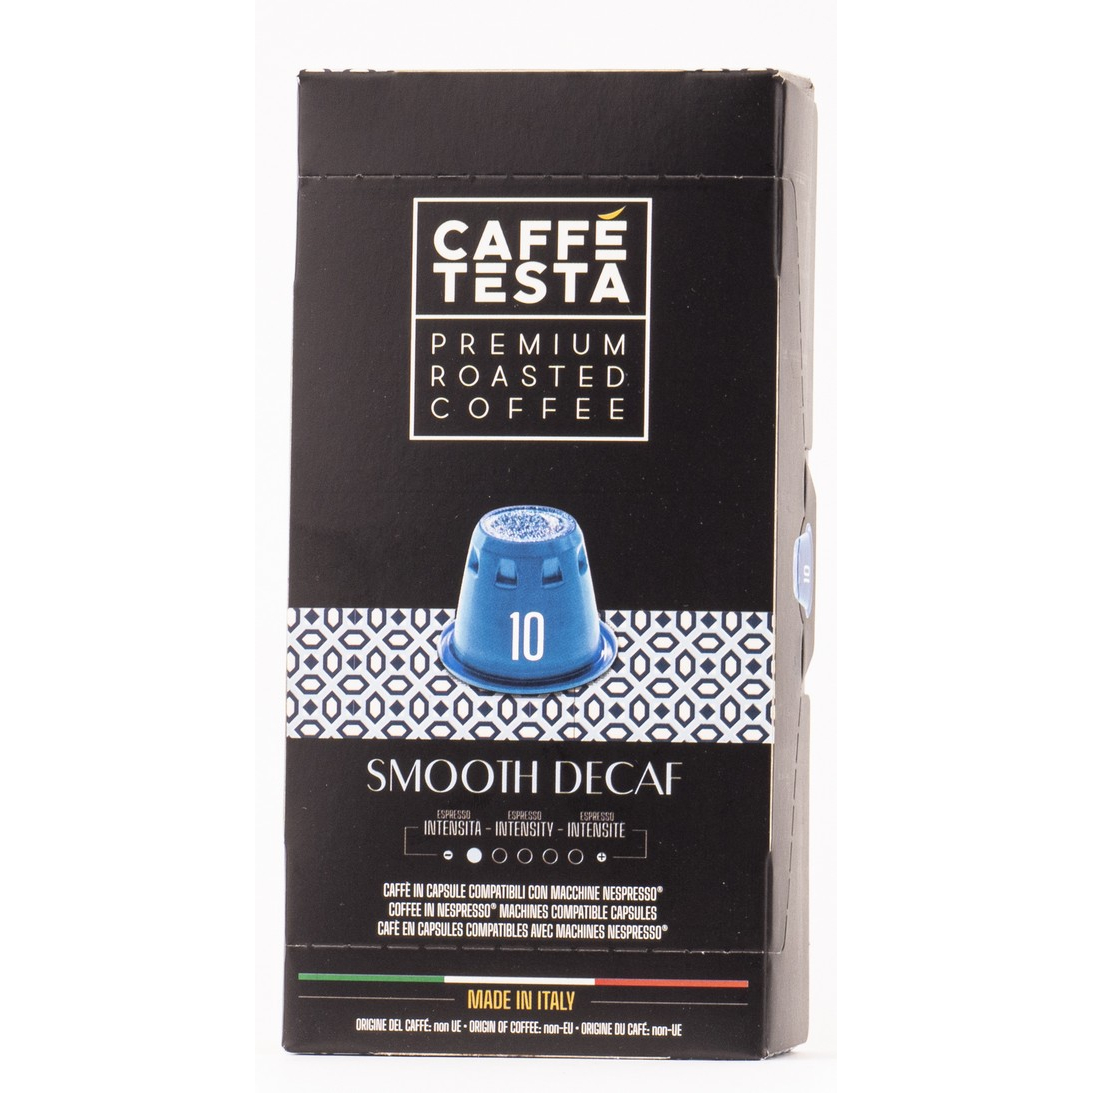 Кофе Caffe Testa Smooth Decaf в капсулах 70/30, 55 г кофе в капсулах diemme caffe mente 10 шт